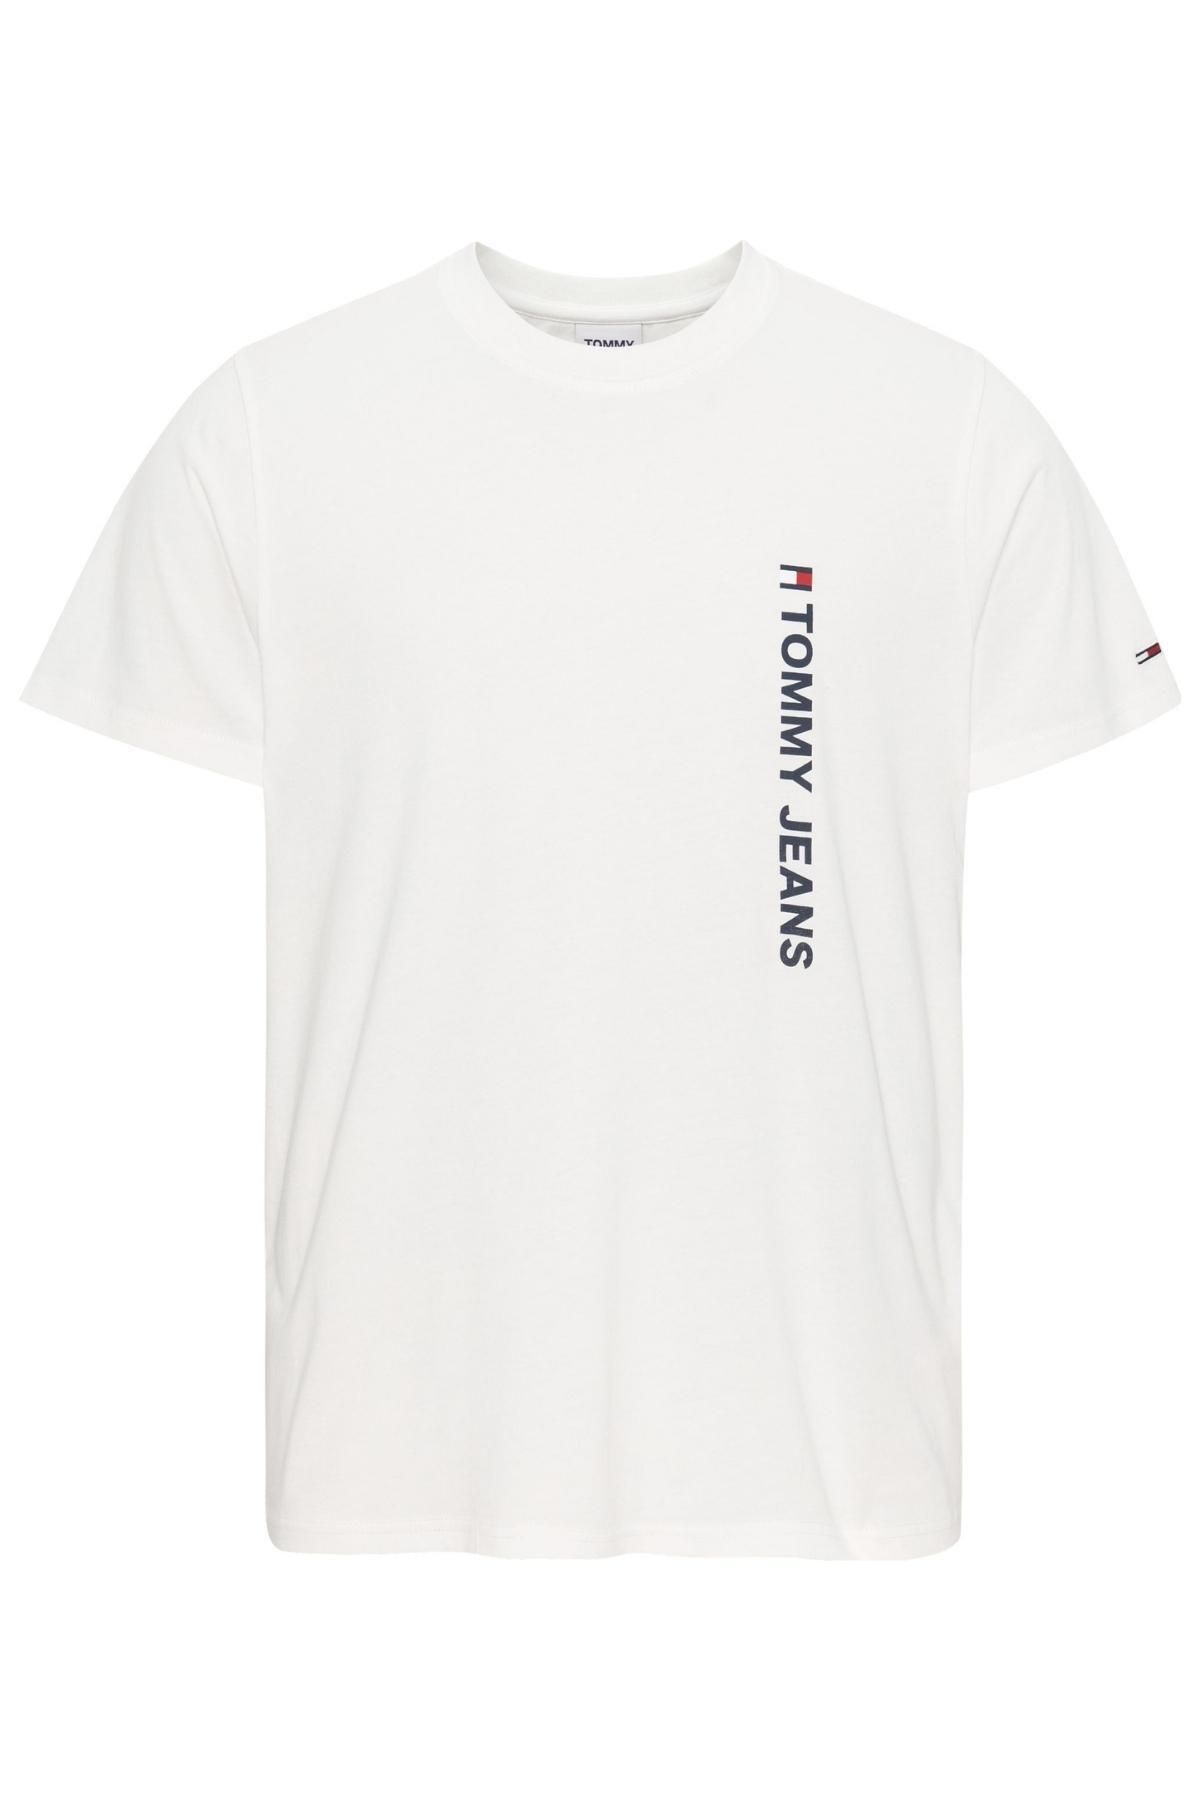 Tommy Hilfiger Erkek Beyaz T-shirt Dm0dm14003ybr-beyaz